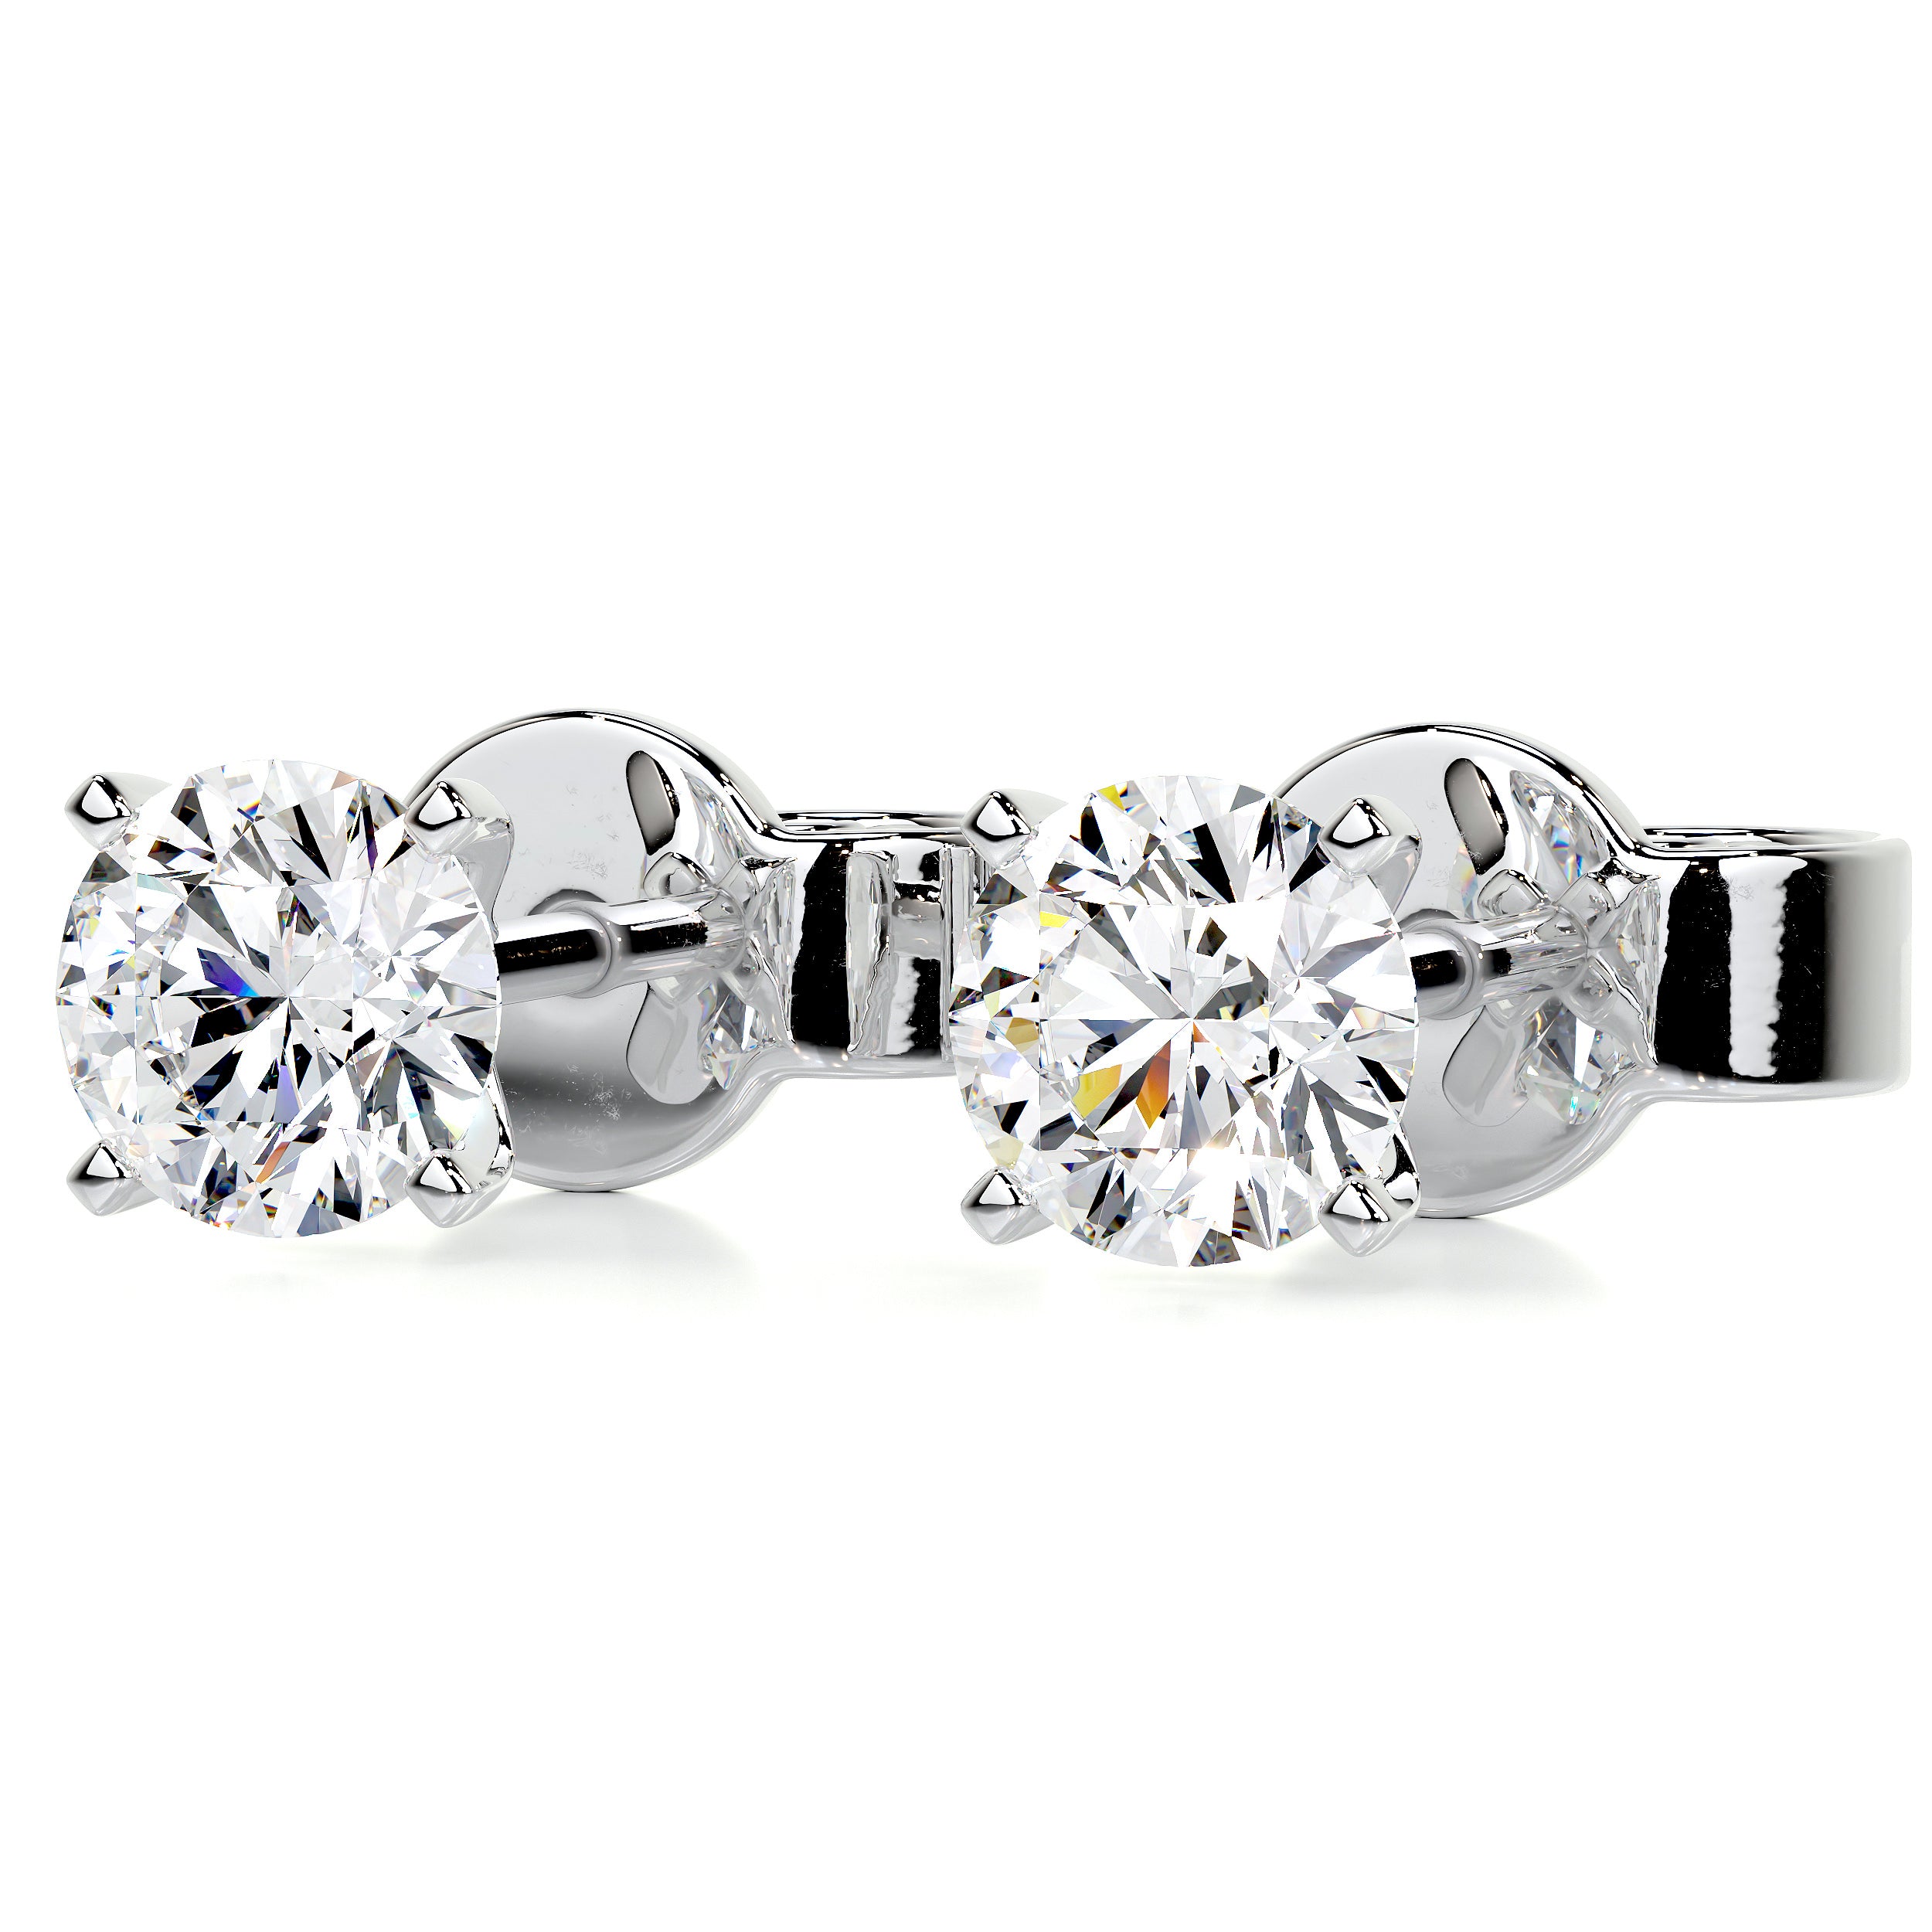 Allen Lab Grown Diamond Earrings   (2 Carat) -18K White Gold